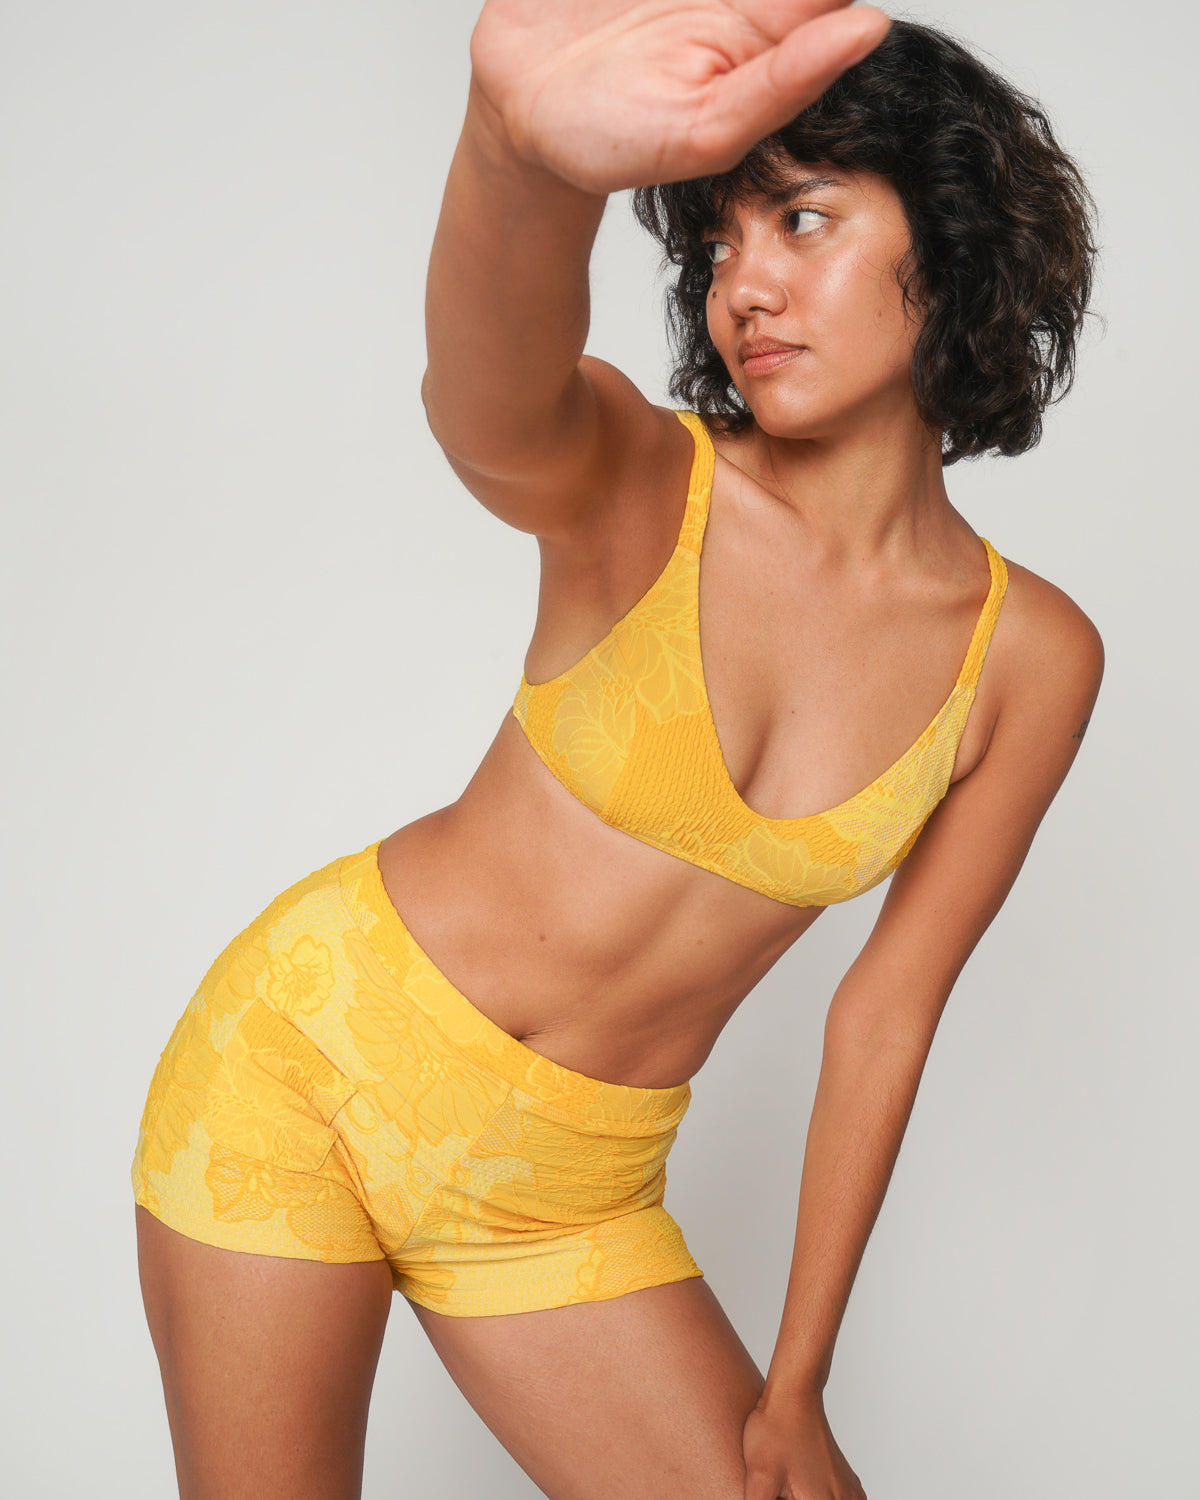 Bobby Nectar Yellow Textured Floral Pattern Bikini Top Swim Suit